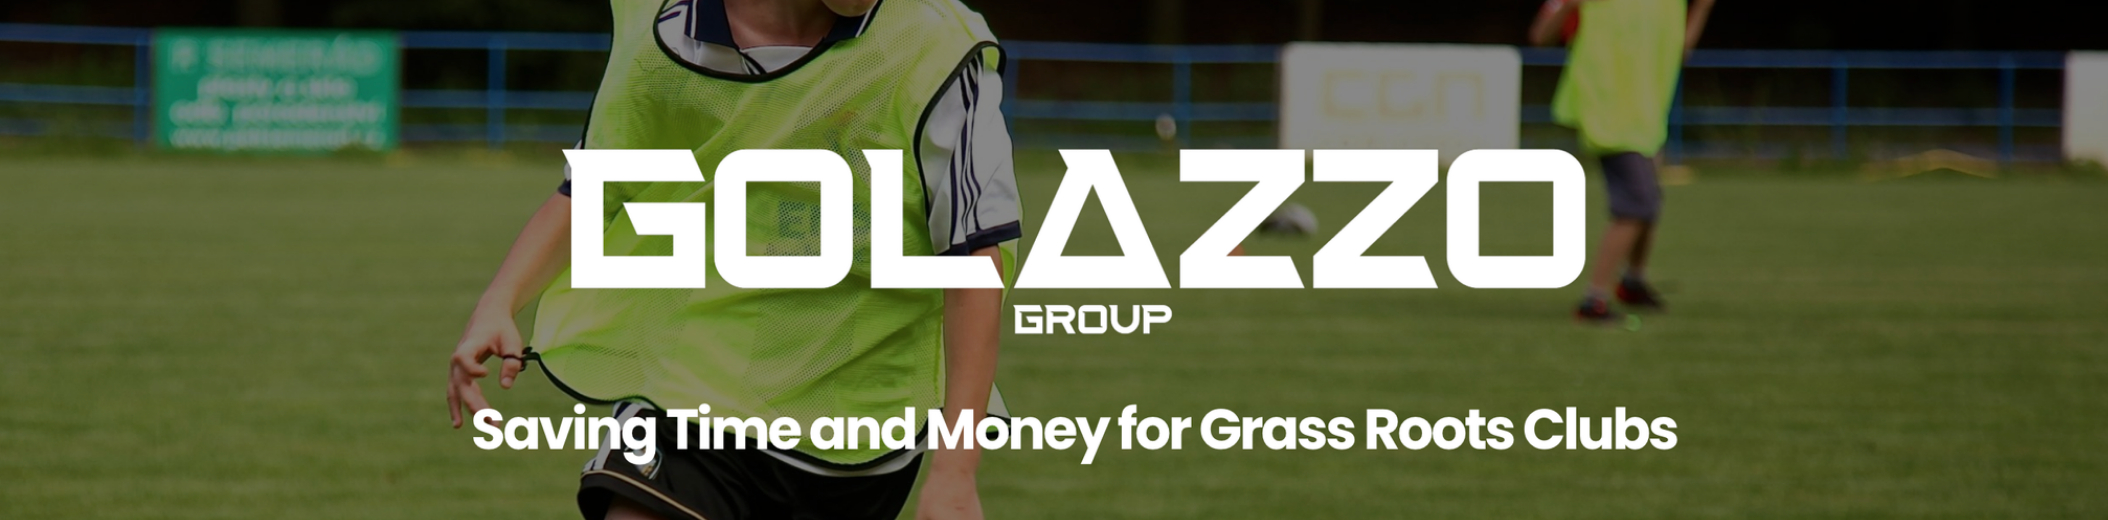 Golazzo Group Banner 1